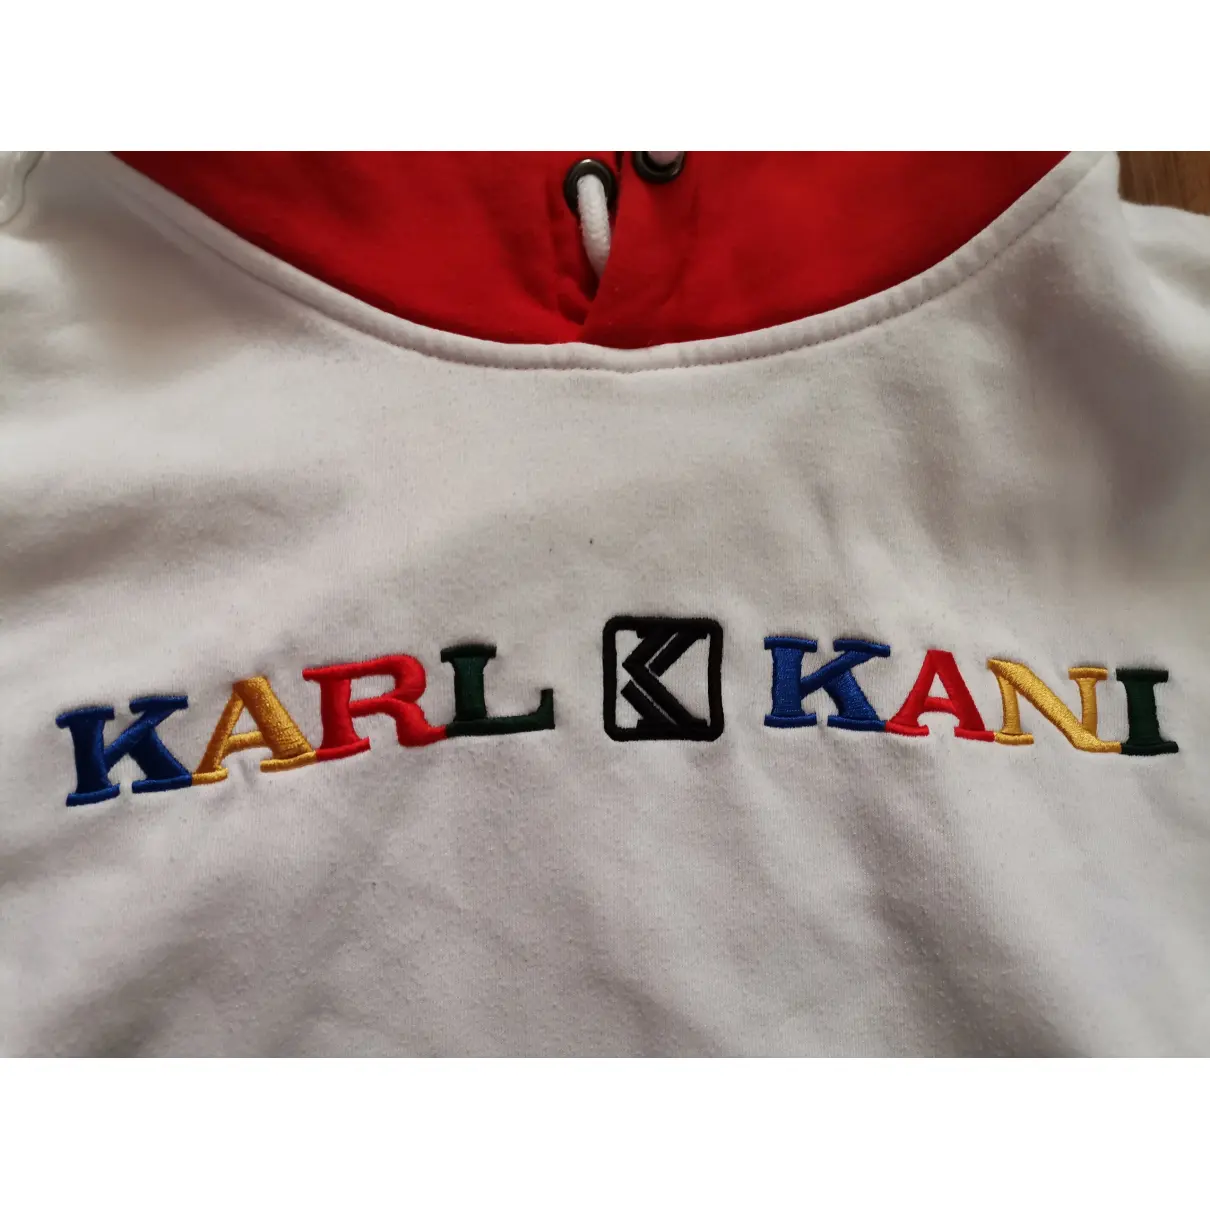 Buy Karl Kani Sweatshirt online